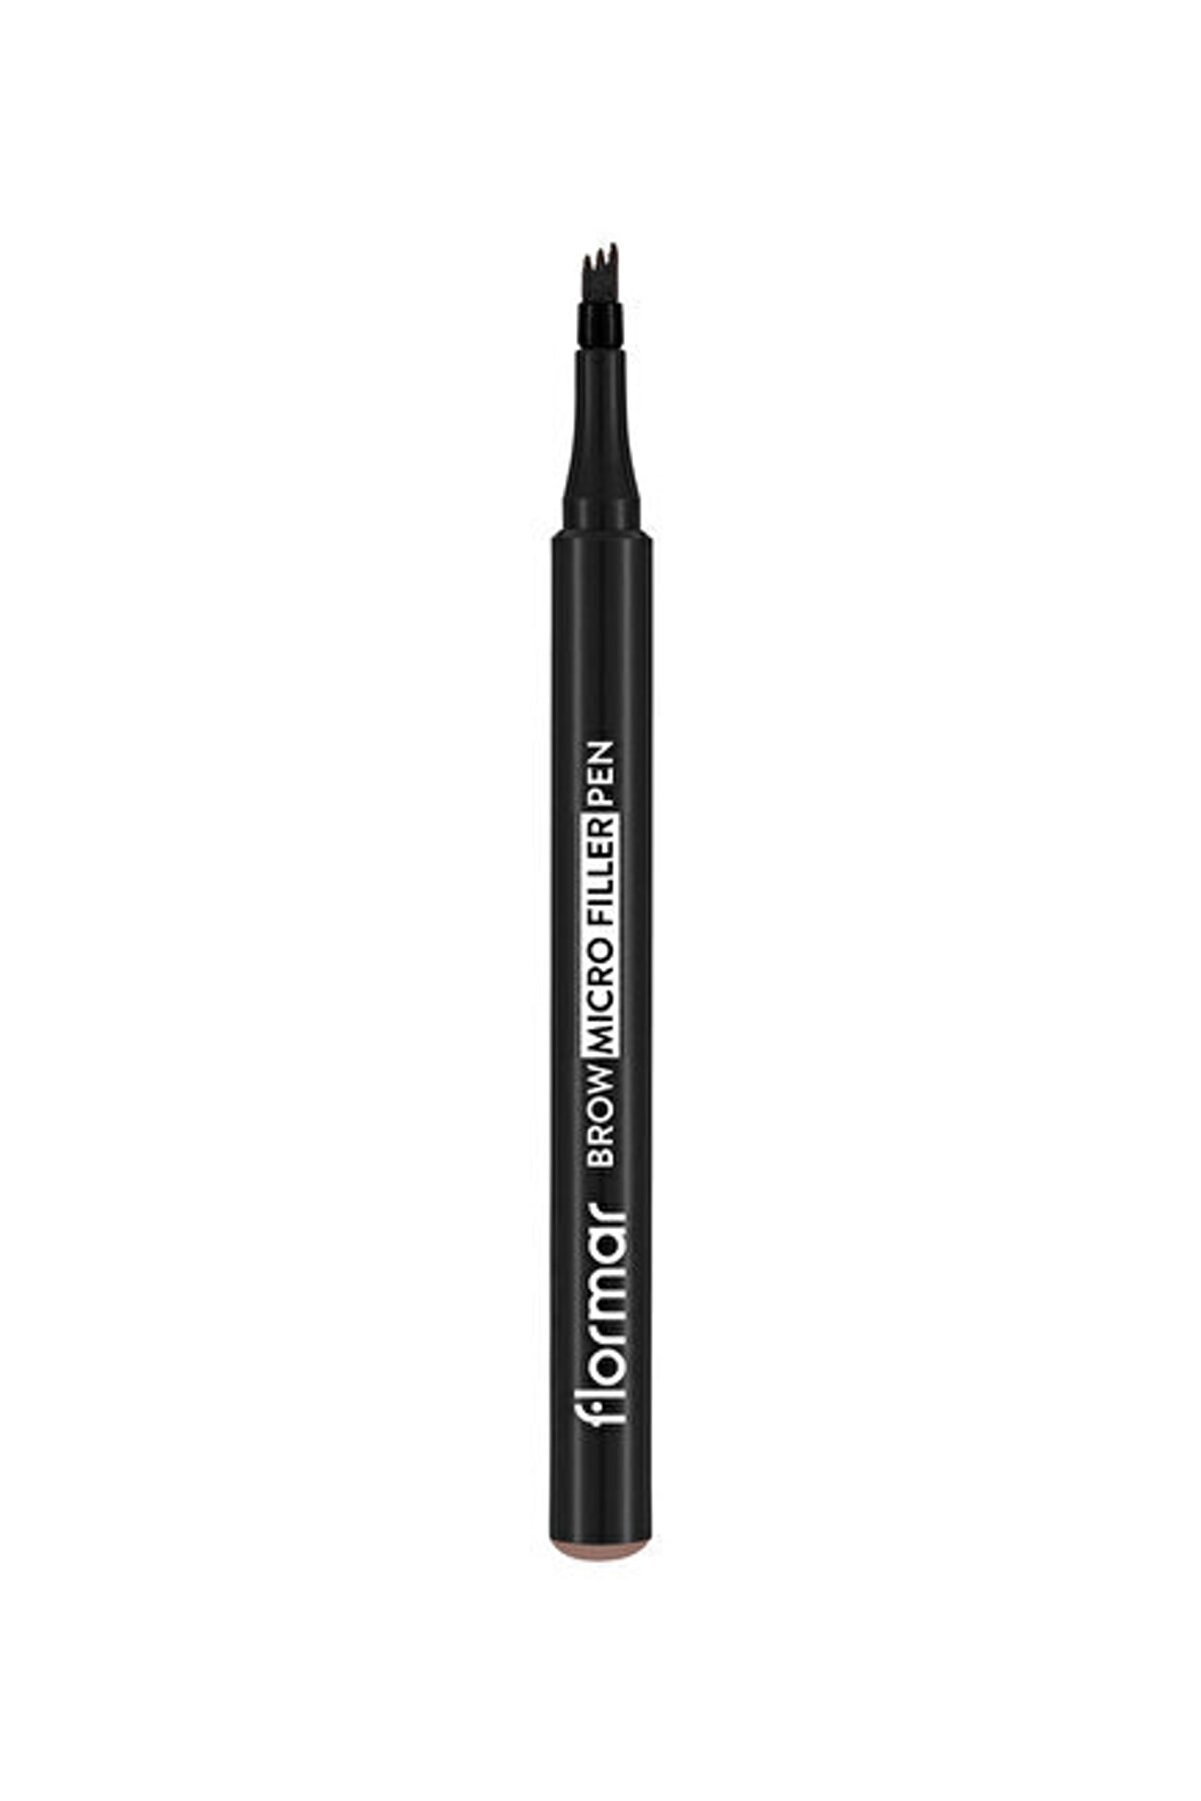 Flormar Kaş Maskarası Ve Kaş Farı - Brow Micro Filler Pen 001 Light Brown 47000097-001